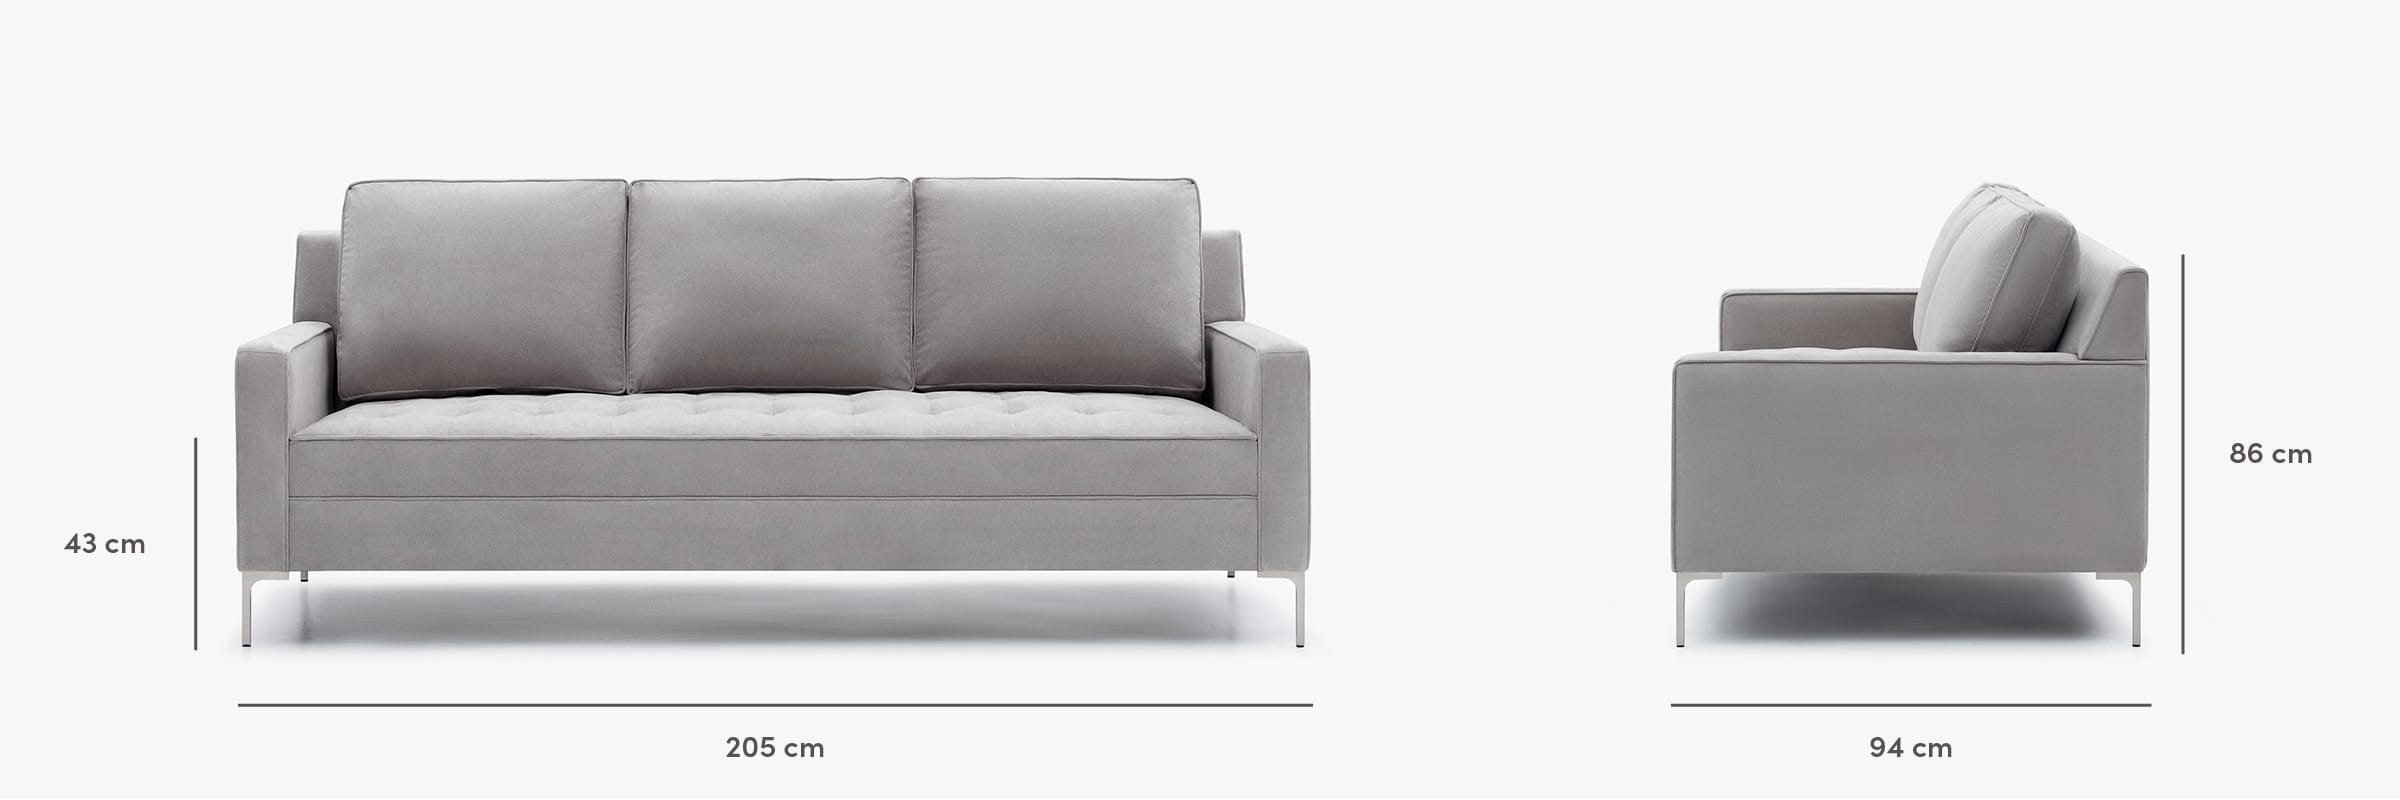 The Hudson Sofa dimensions